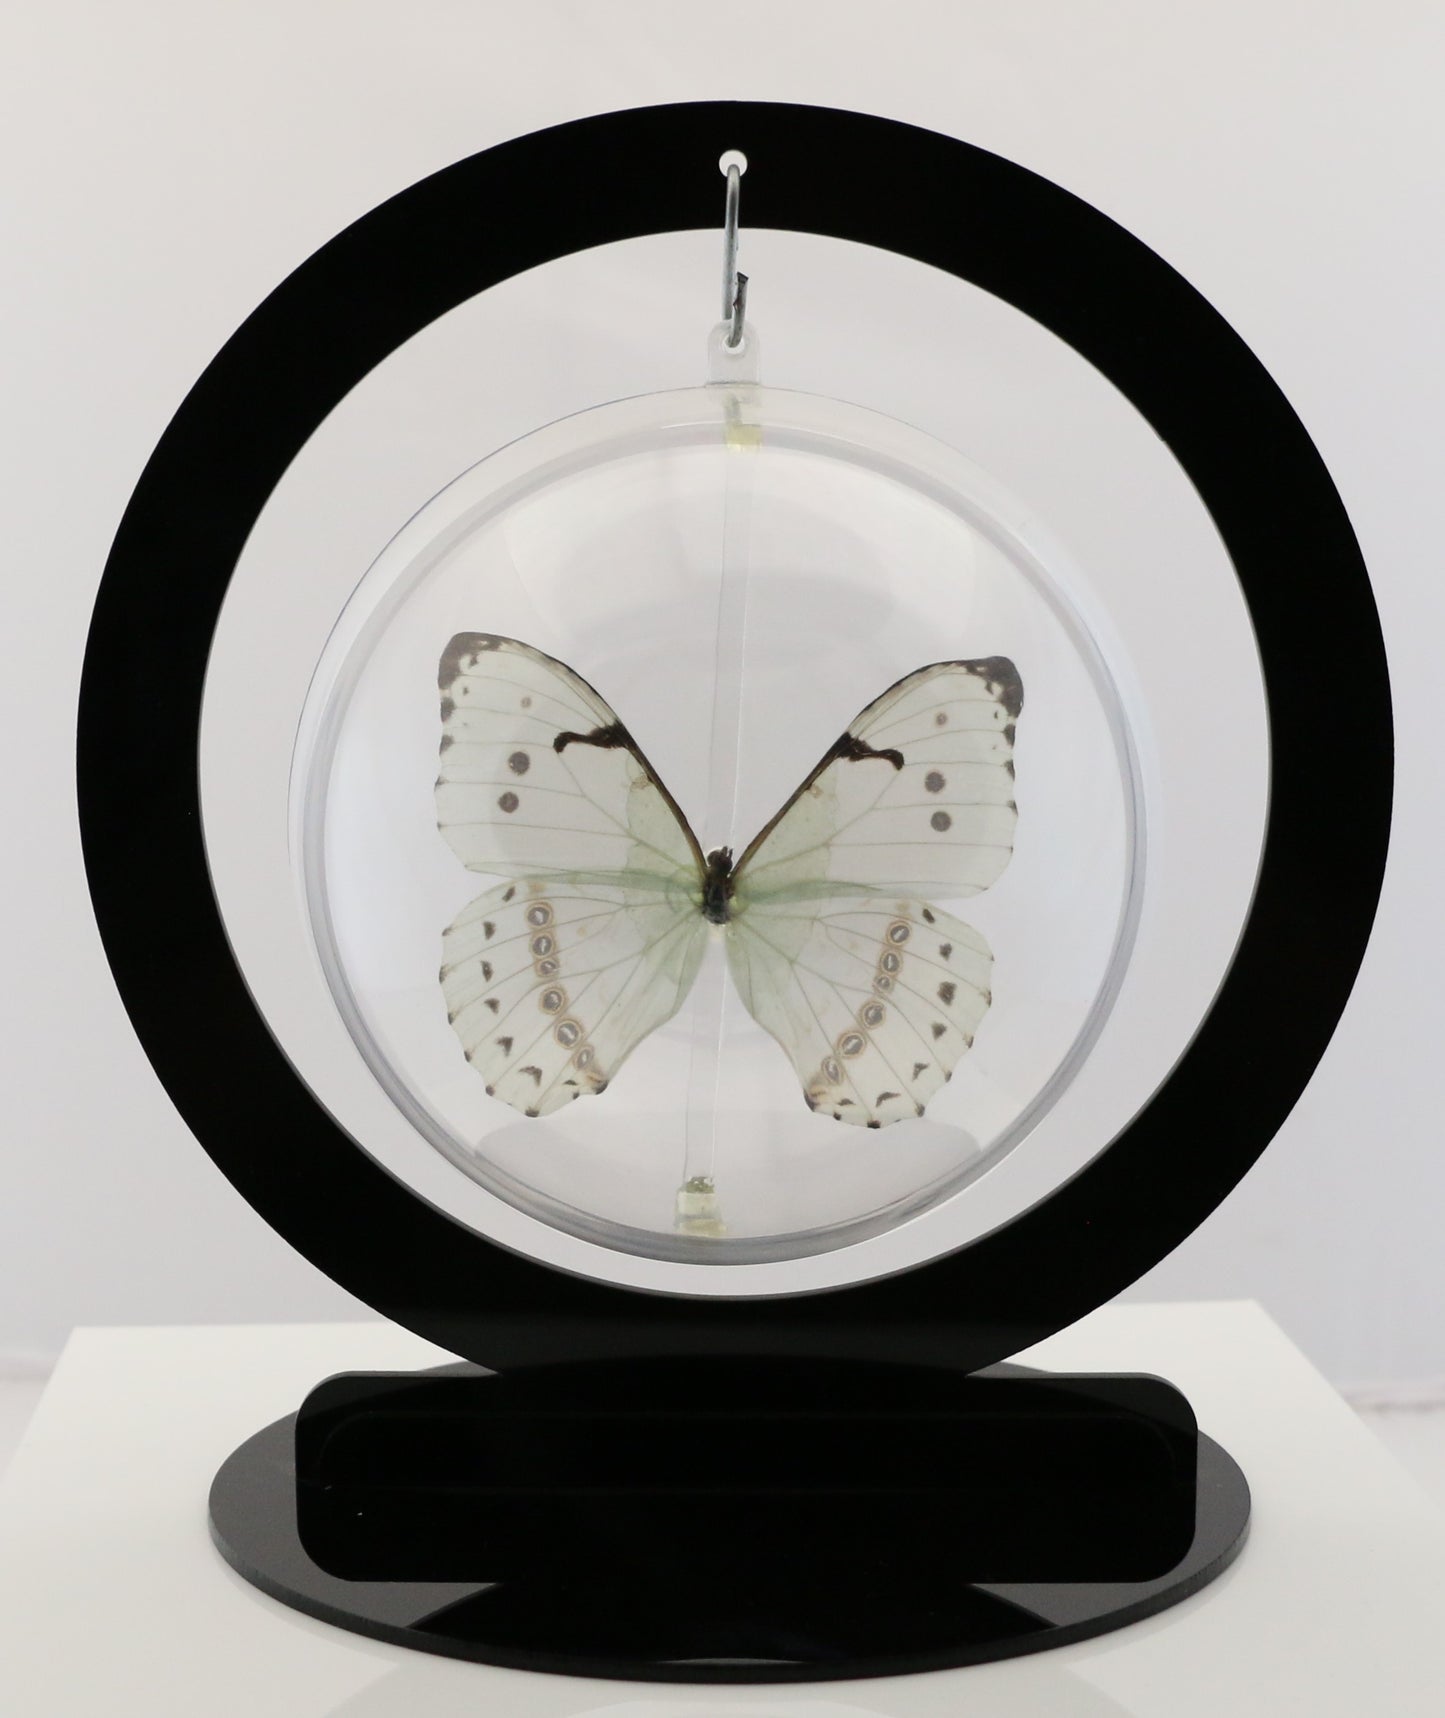 750303 - Butterfly Bubble - Lg. - Round - Mint Morpho (Morpho catenarius)